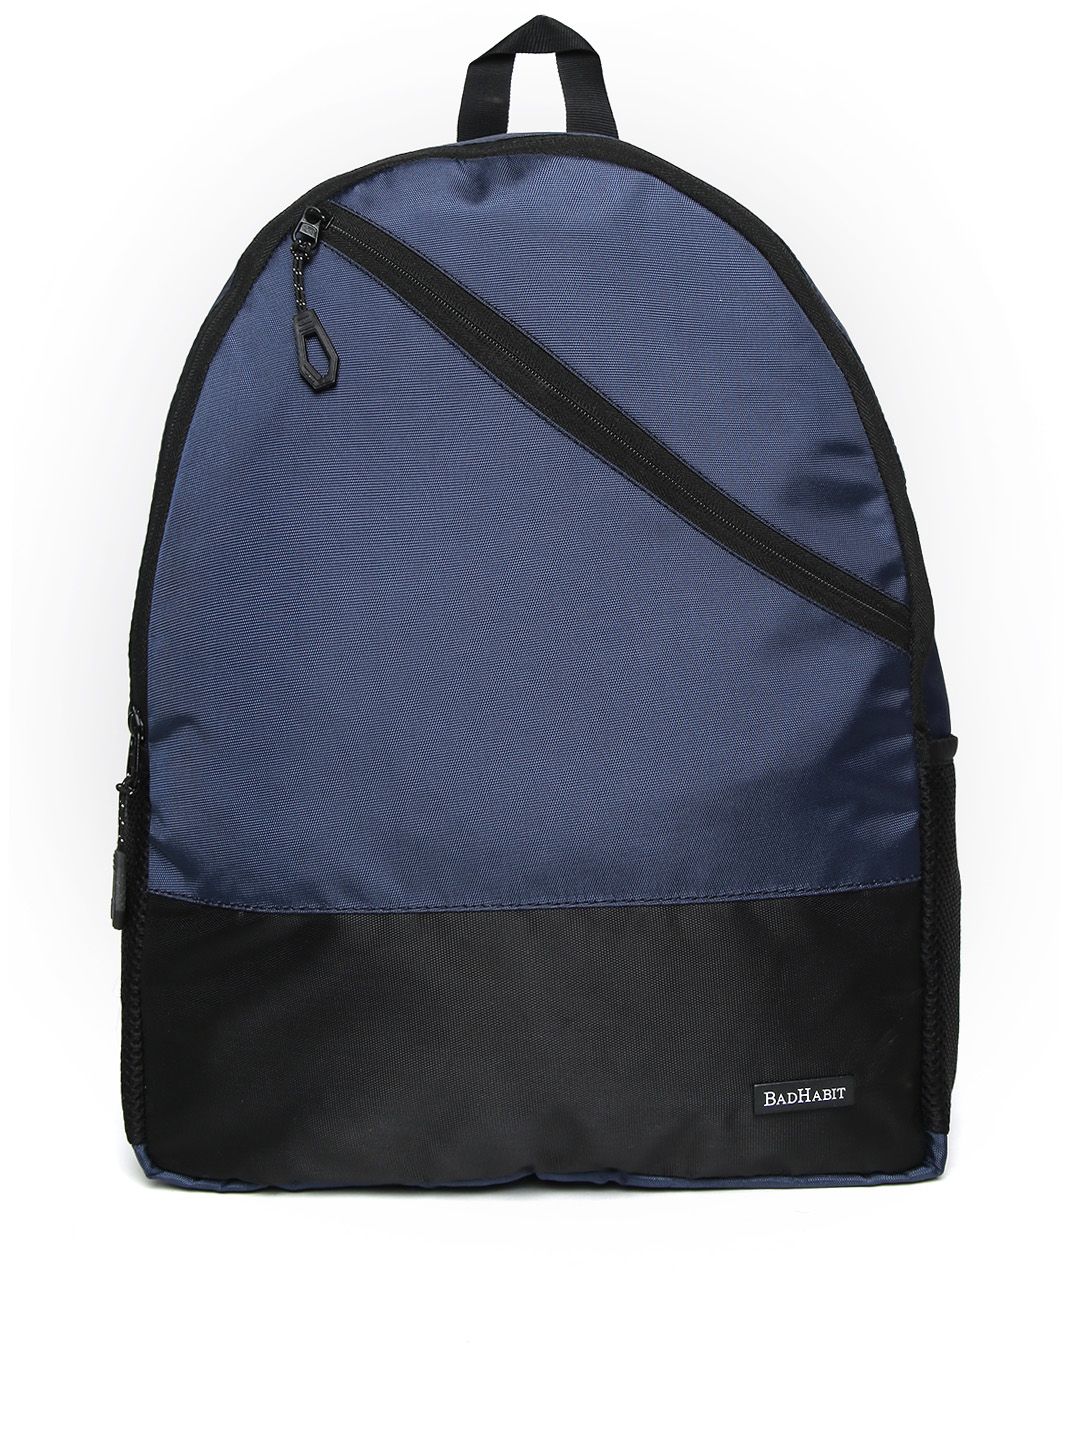 BAD HABIT Unisex Navy Blue & Black Colourblocked Backpack Price in India